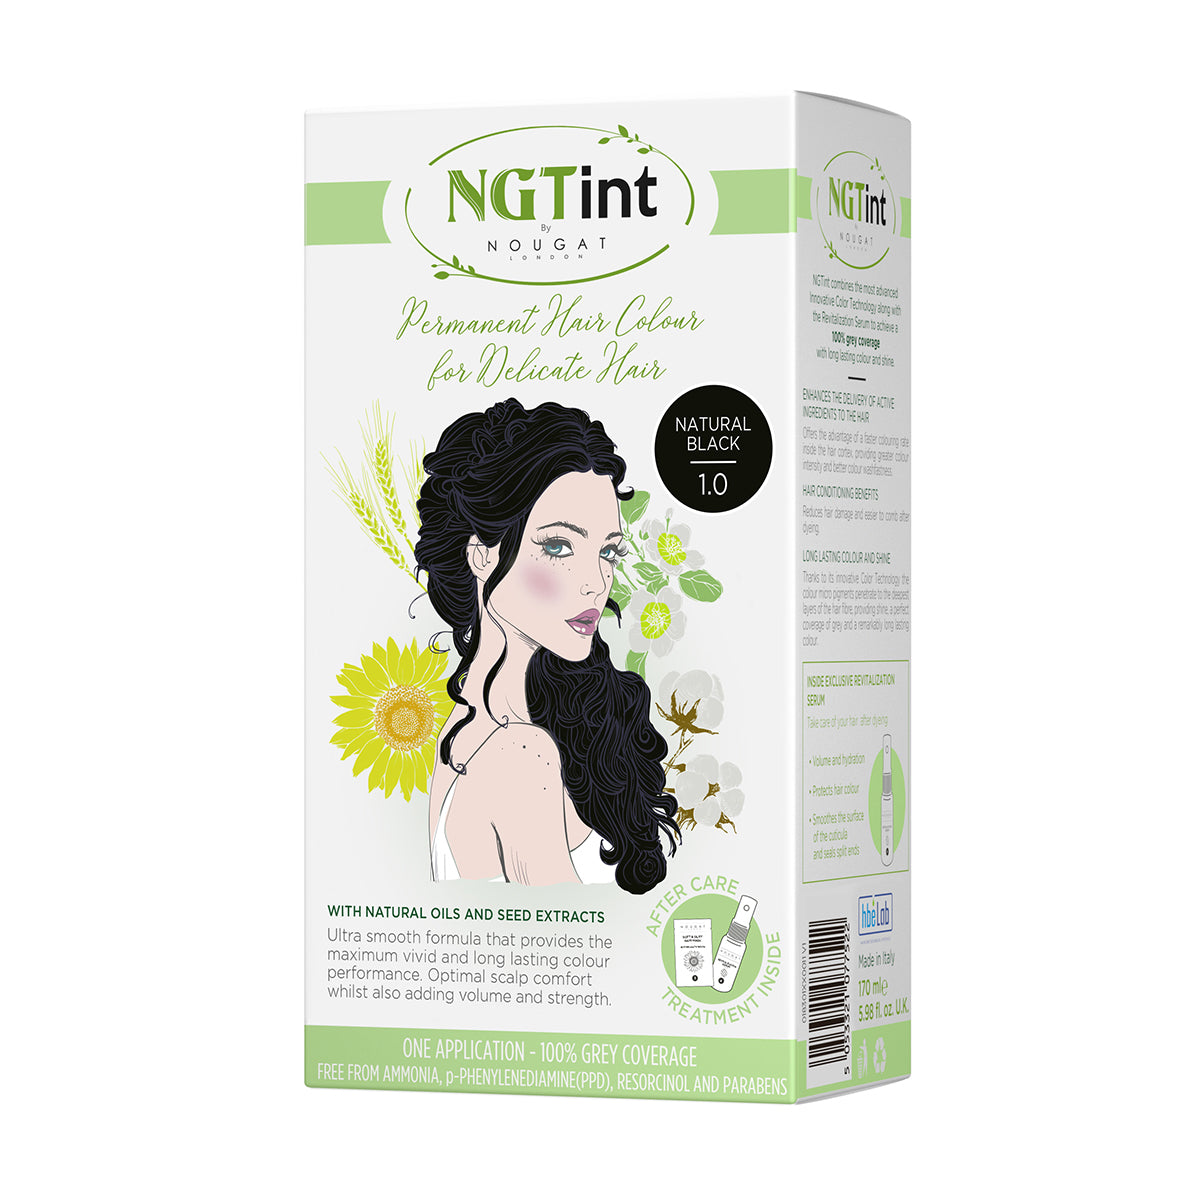 NGTint Permanent Hair Colour Natural Black 1.0 170ML